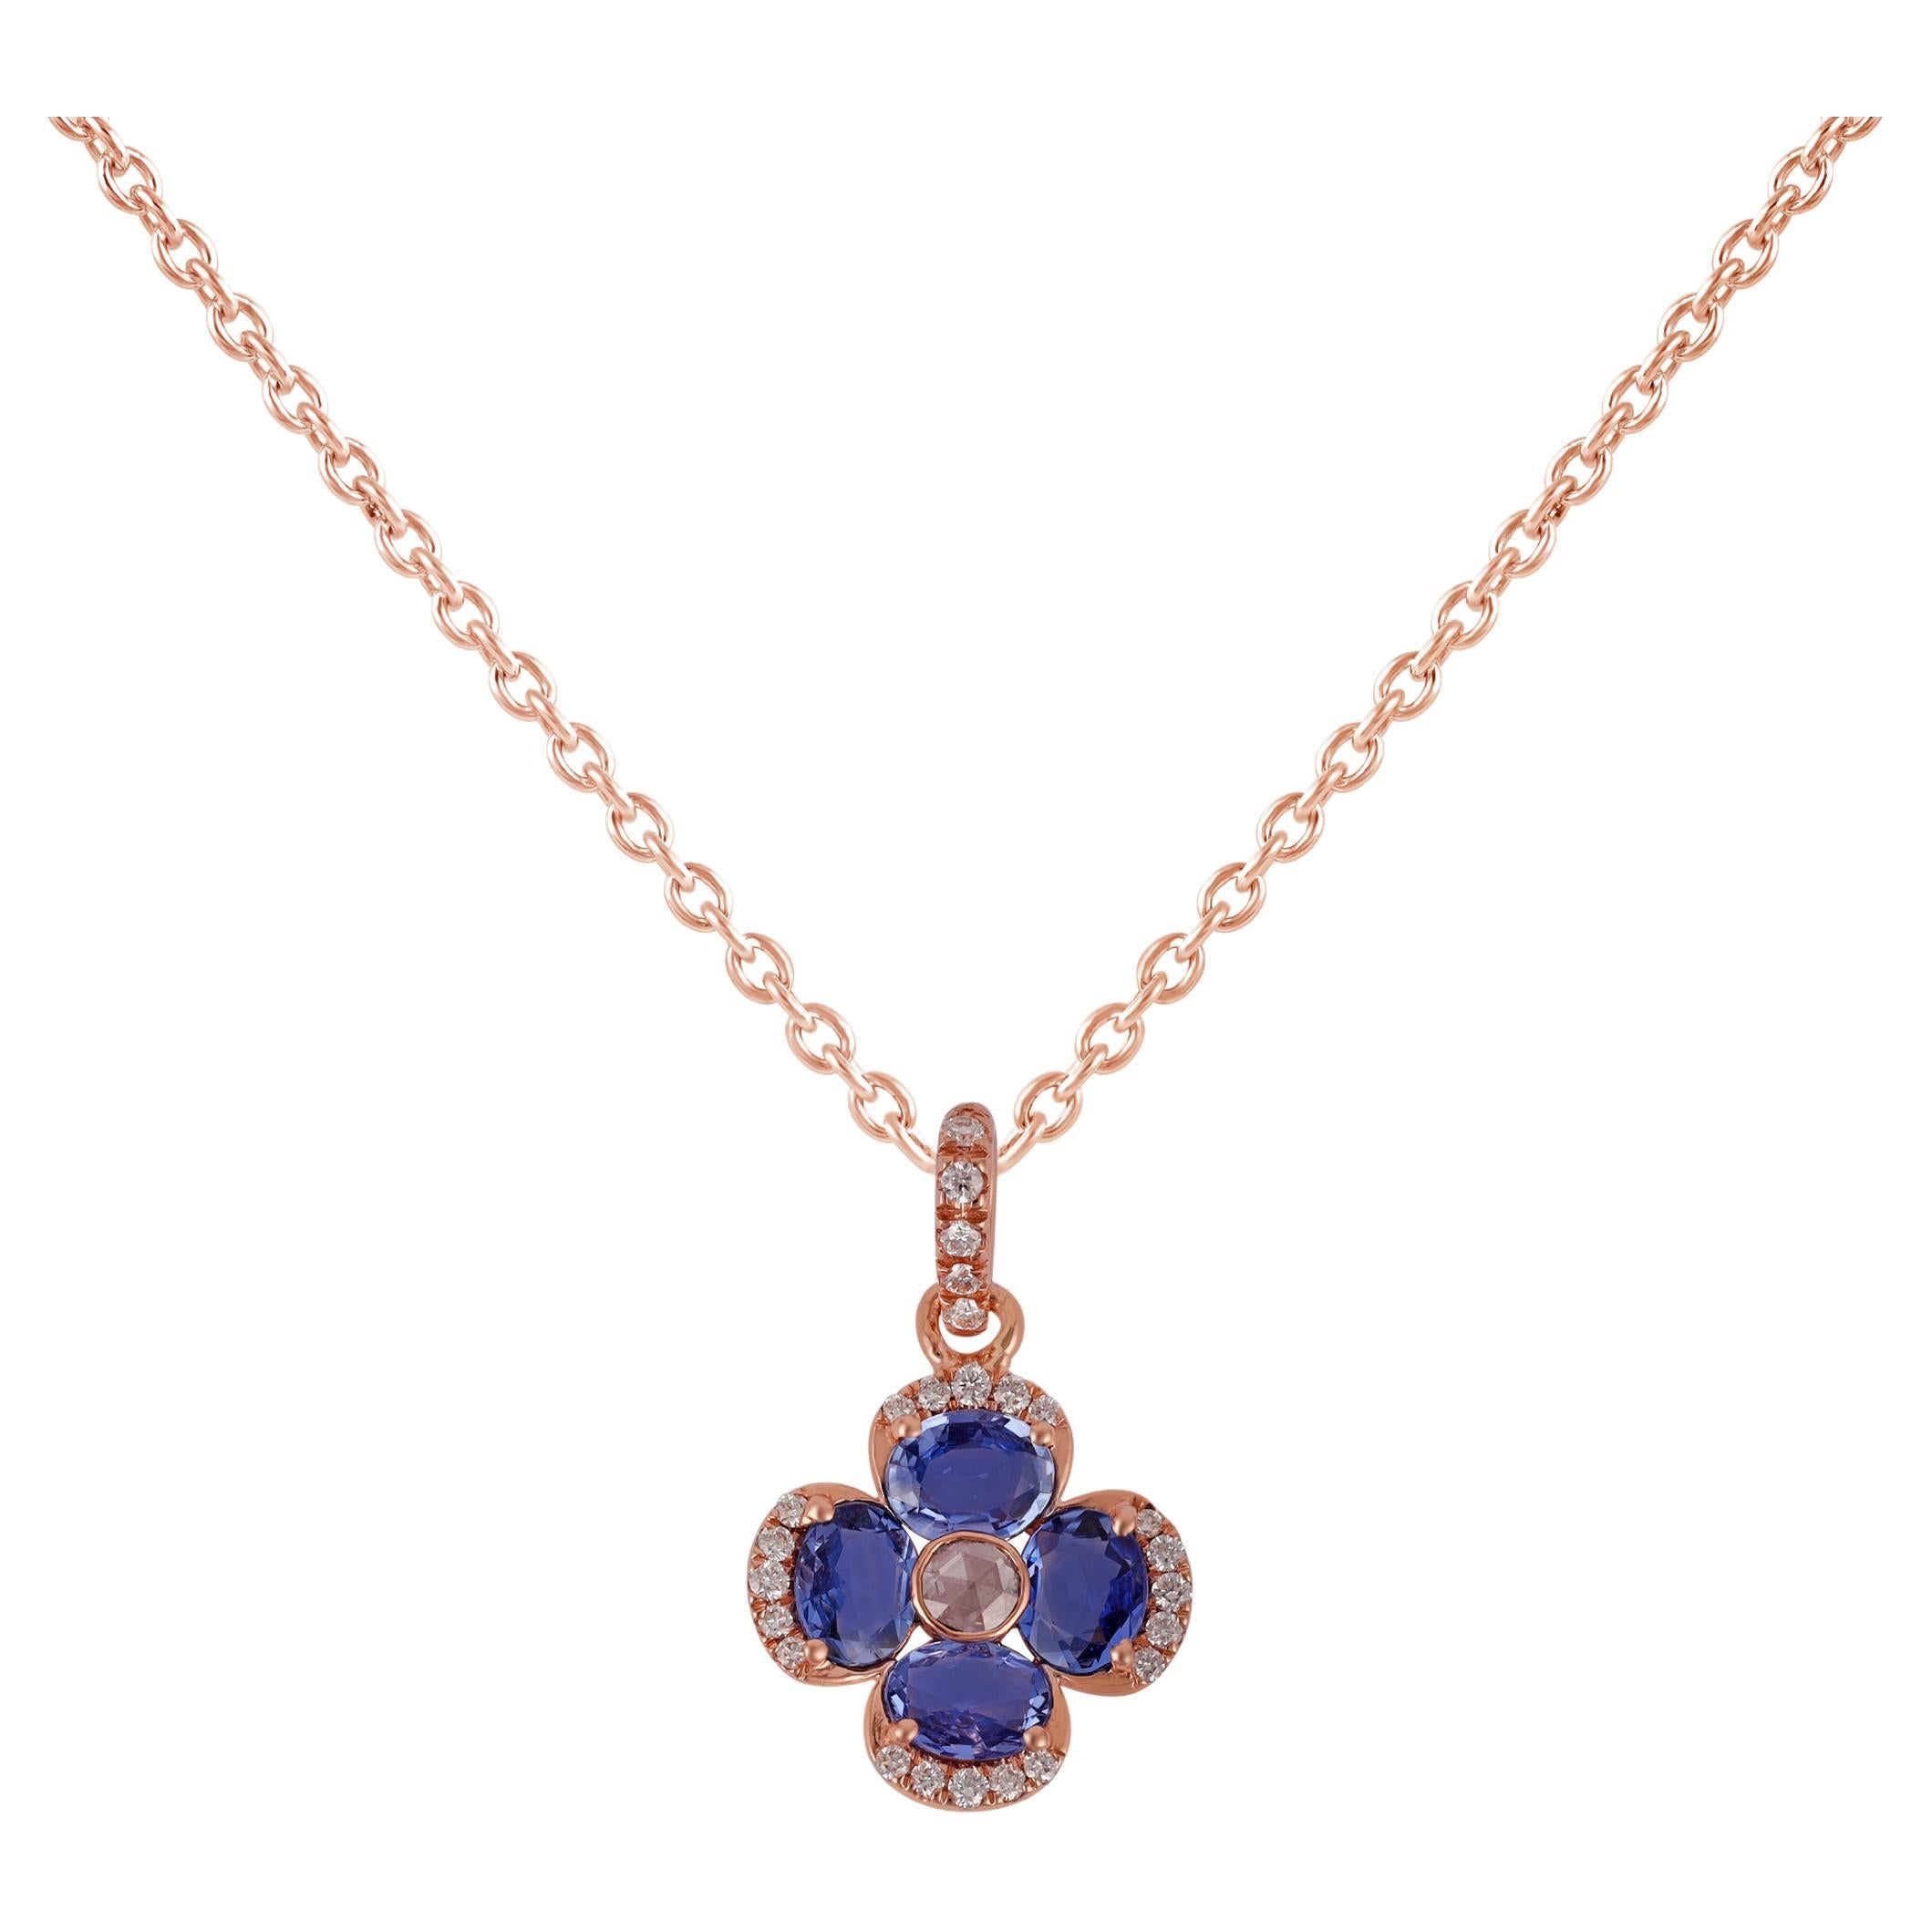 1.51 Carat Oval Cut Blue Sapphire Pendant Necklace in 18 Karat Gold with Diamond For Sale